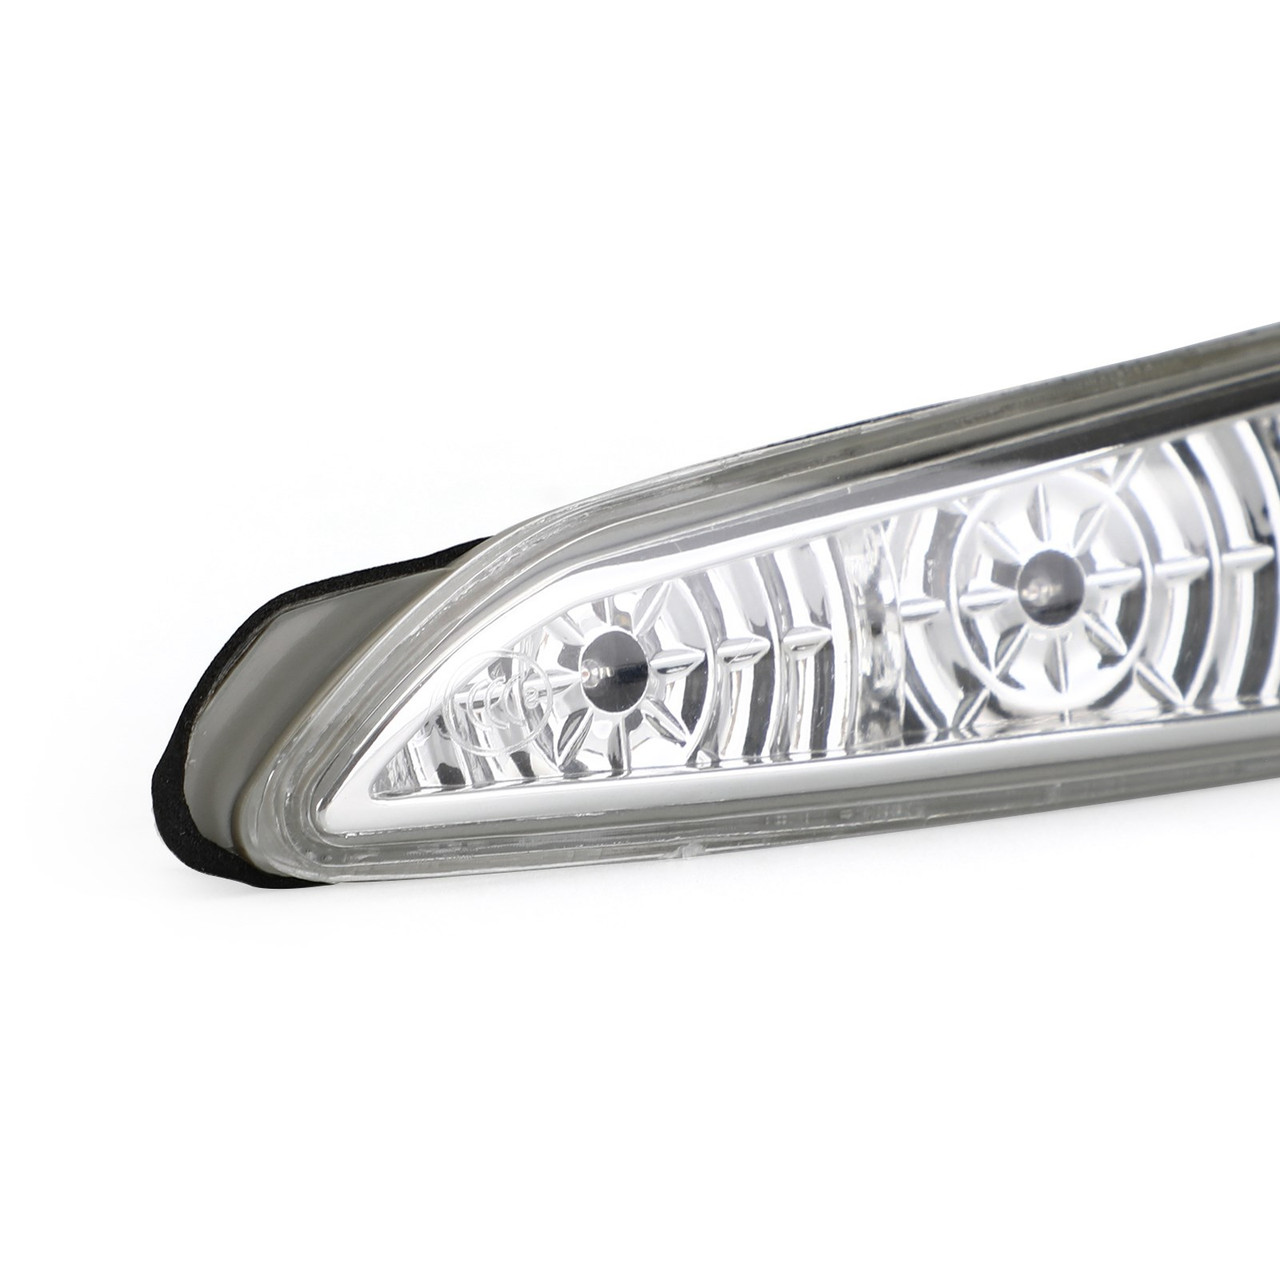 Right Side Mirror Lamp Turn Signal Light Fit For Hyundai Sonata MK8 2011-2015 Chrome